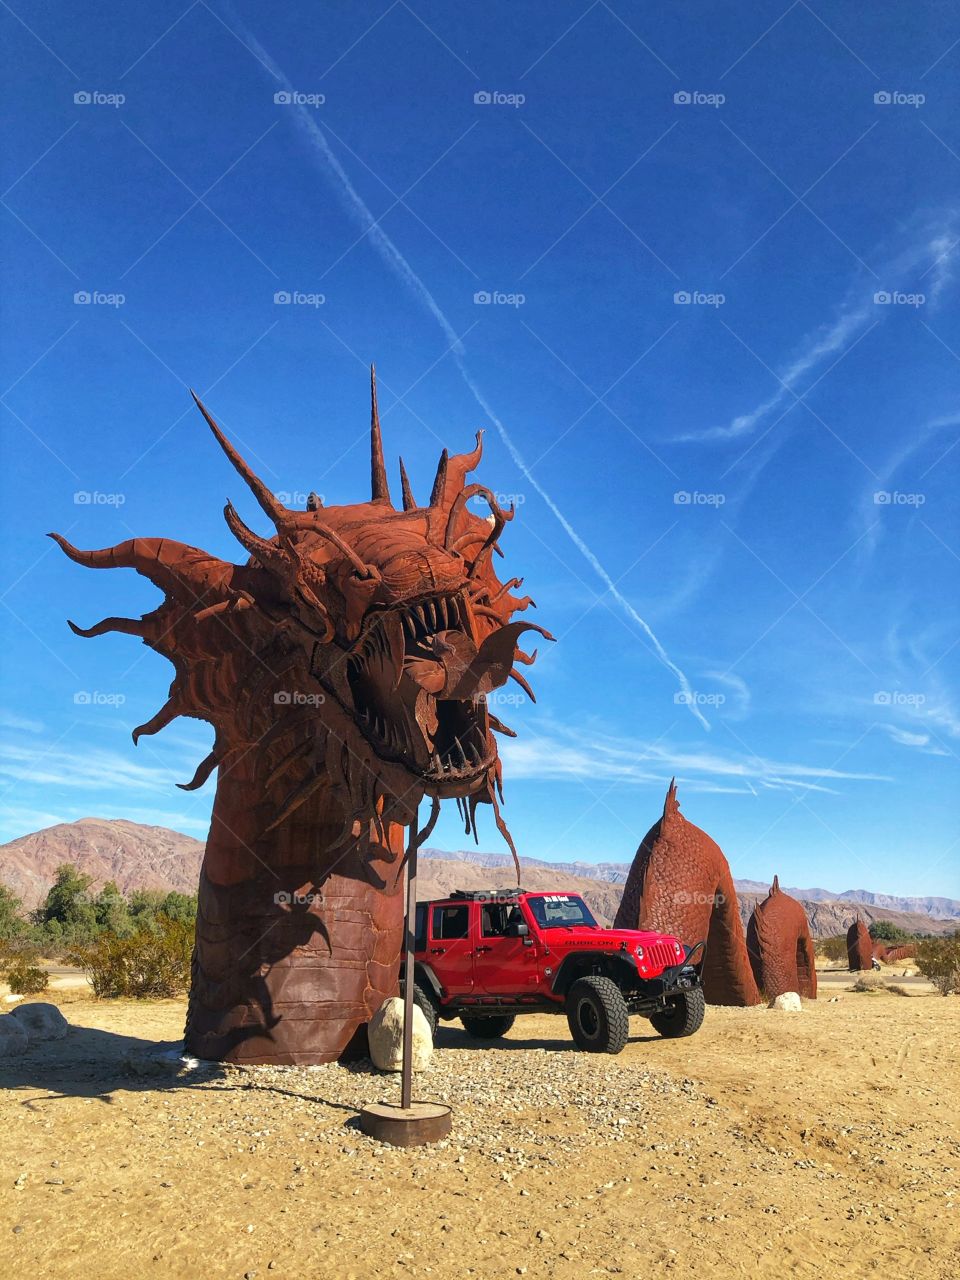 Red Jeep along side large metal dragon sculpture against backdrop of big blue sky